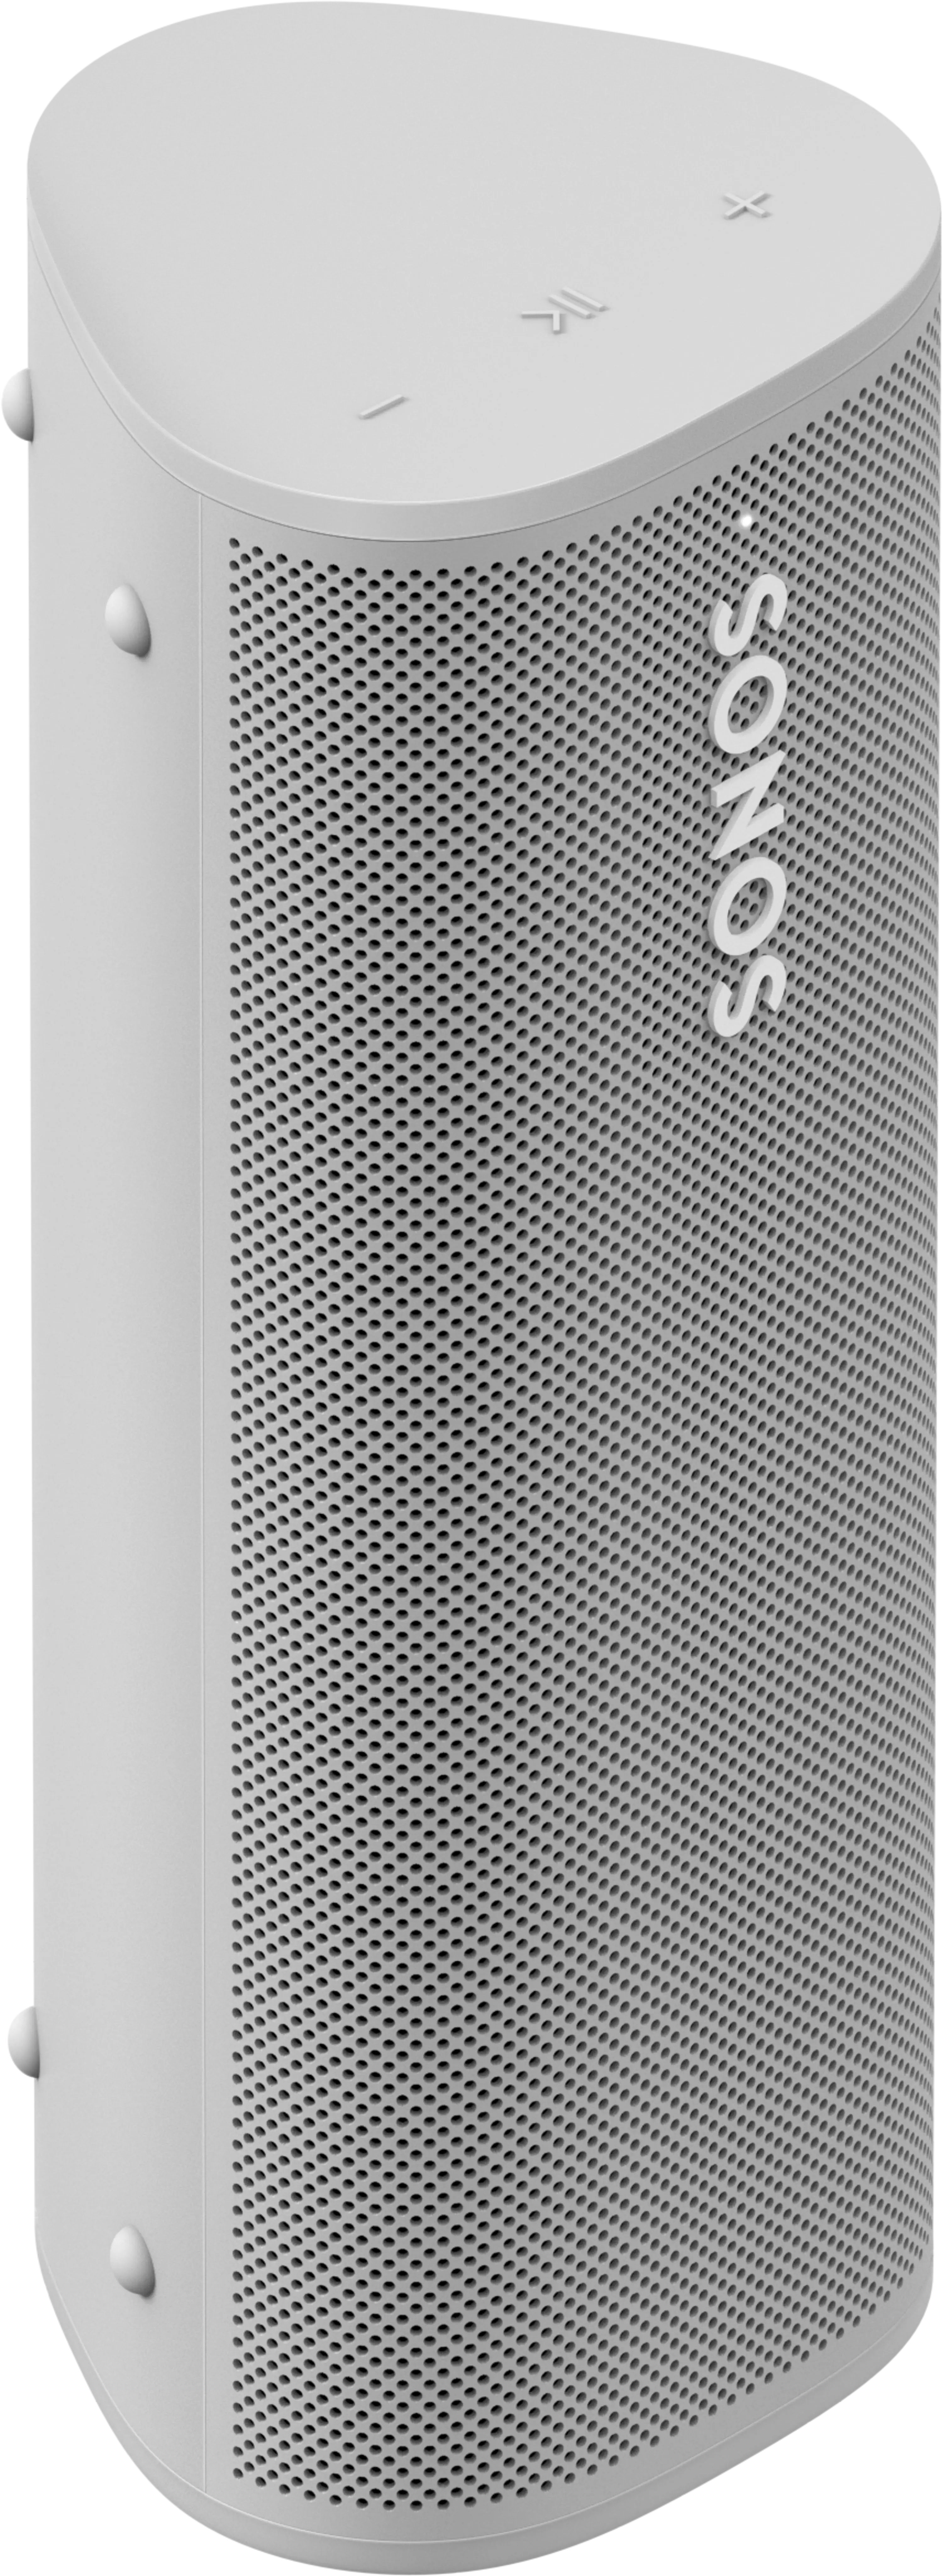 Roam SL: A Portable WiFi & Bluetooth Speaker | Sonos | Sonos